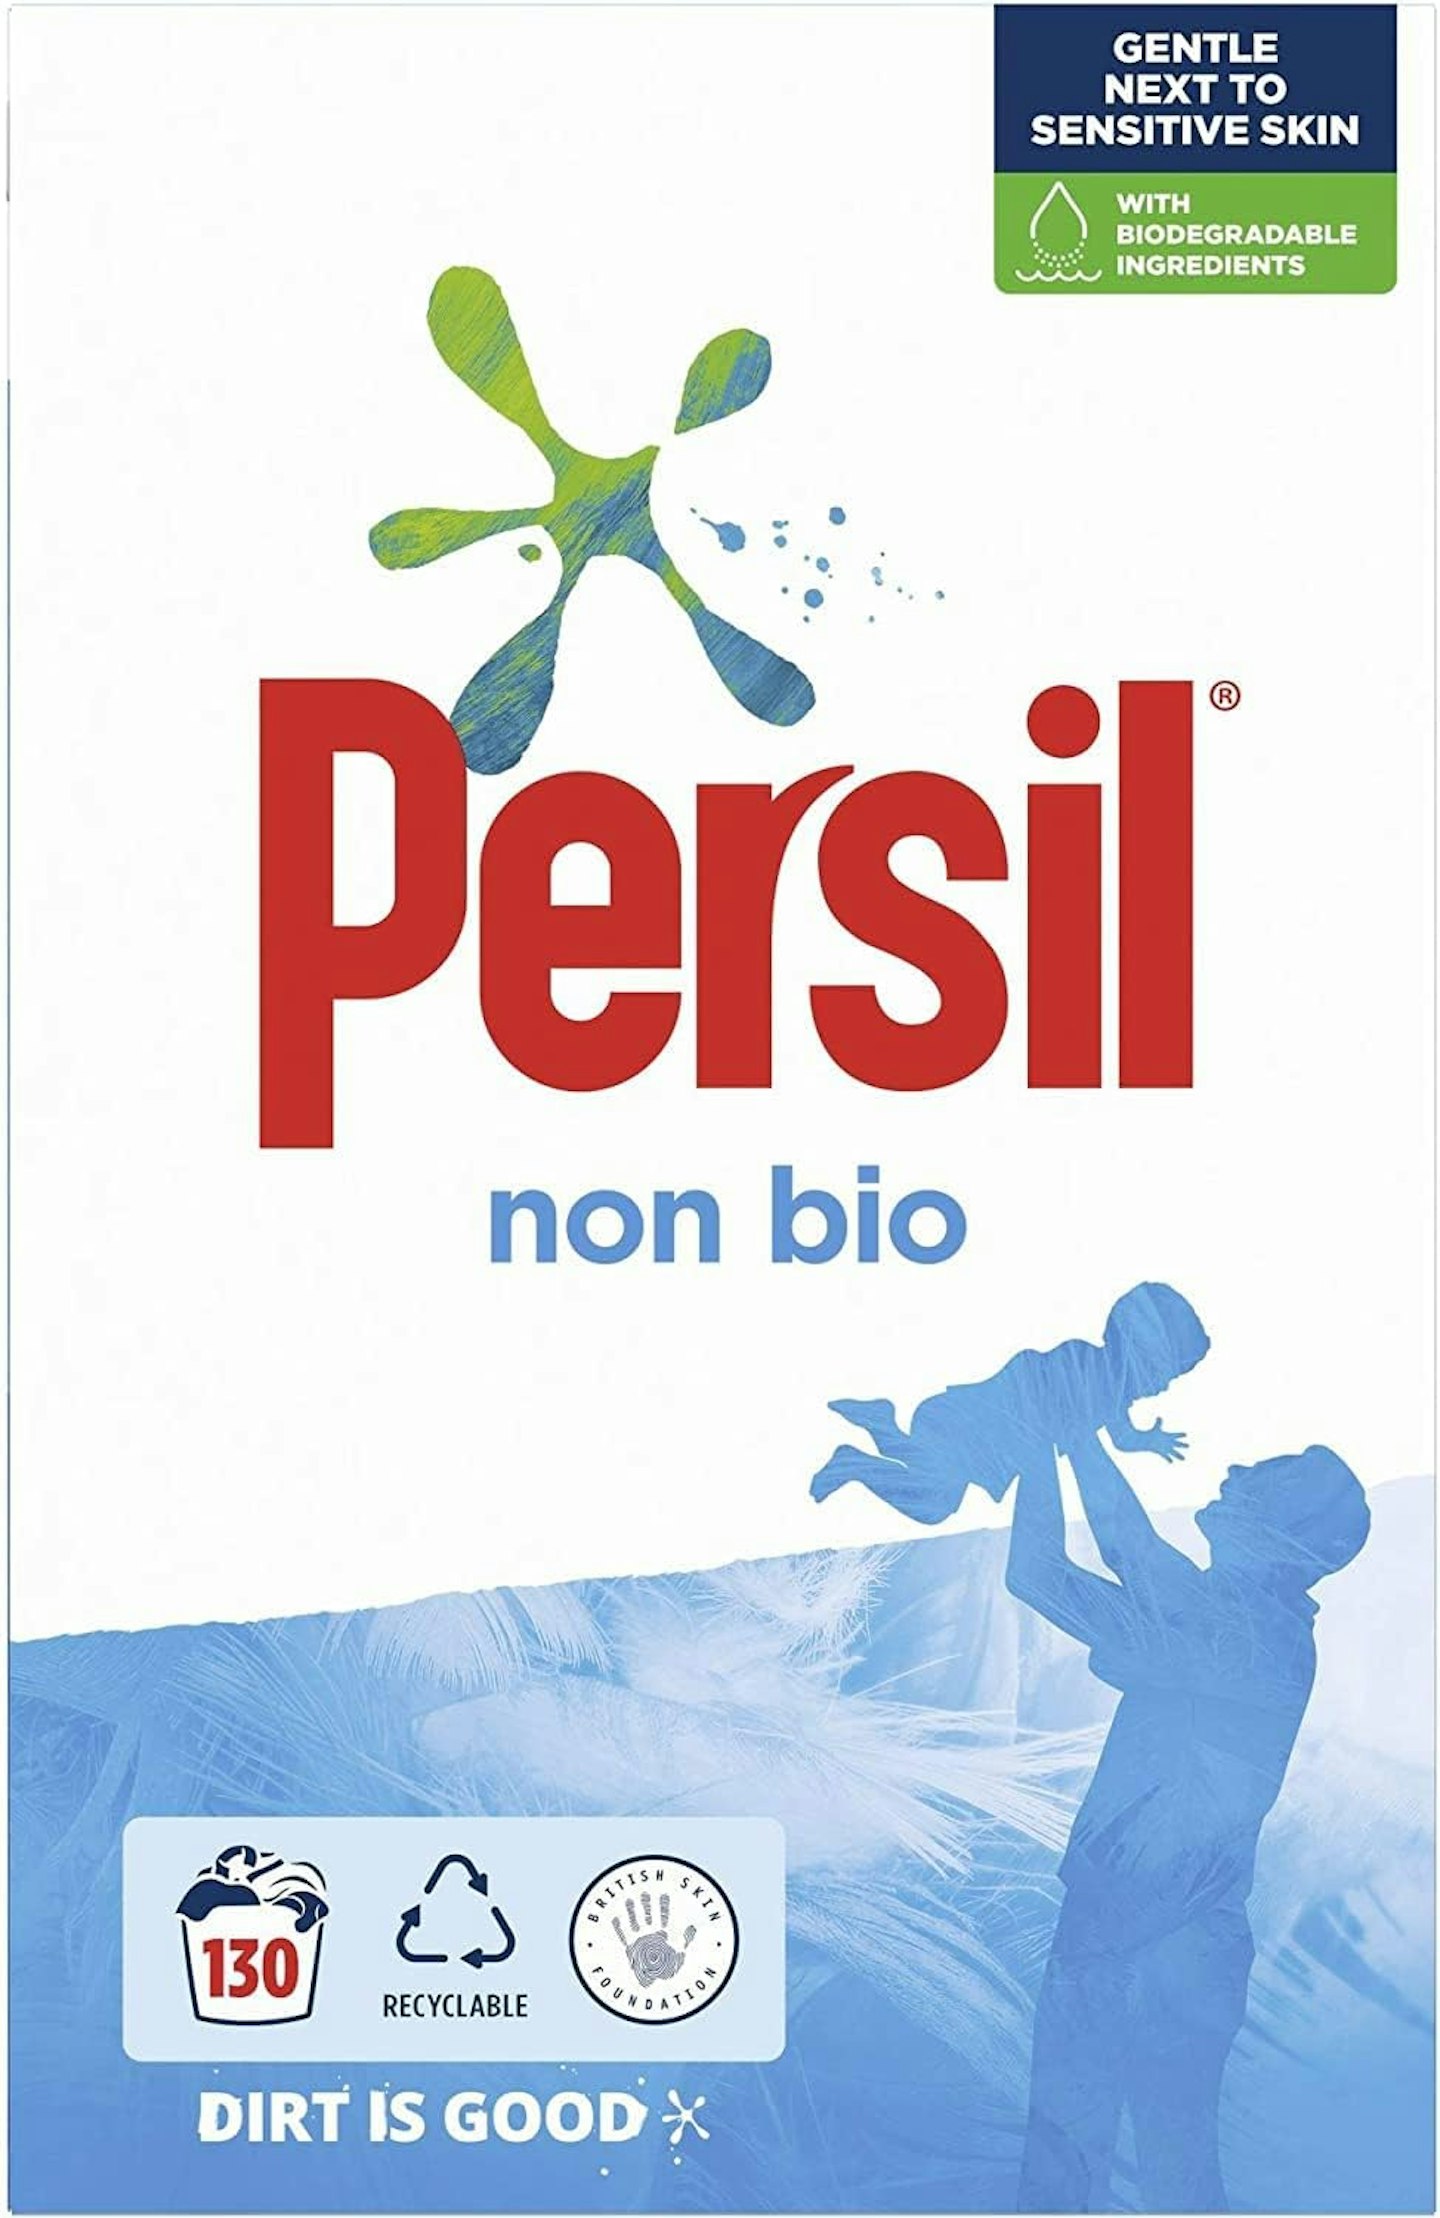 Persil non-bio washing powder